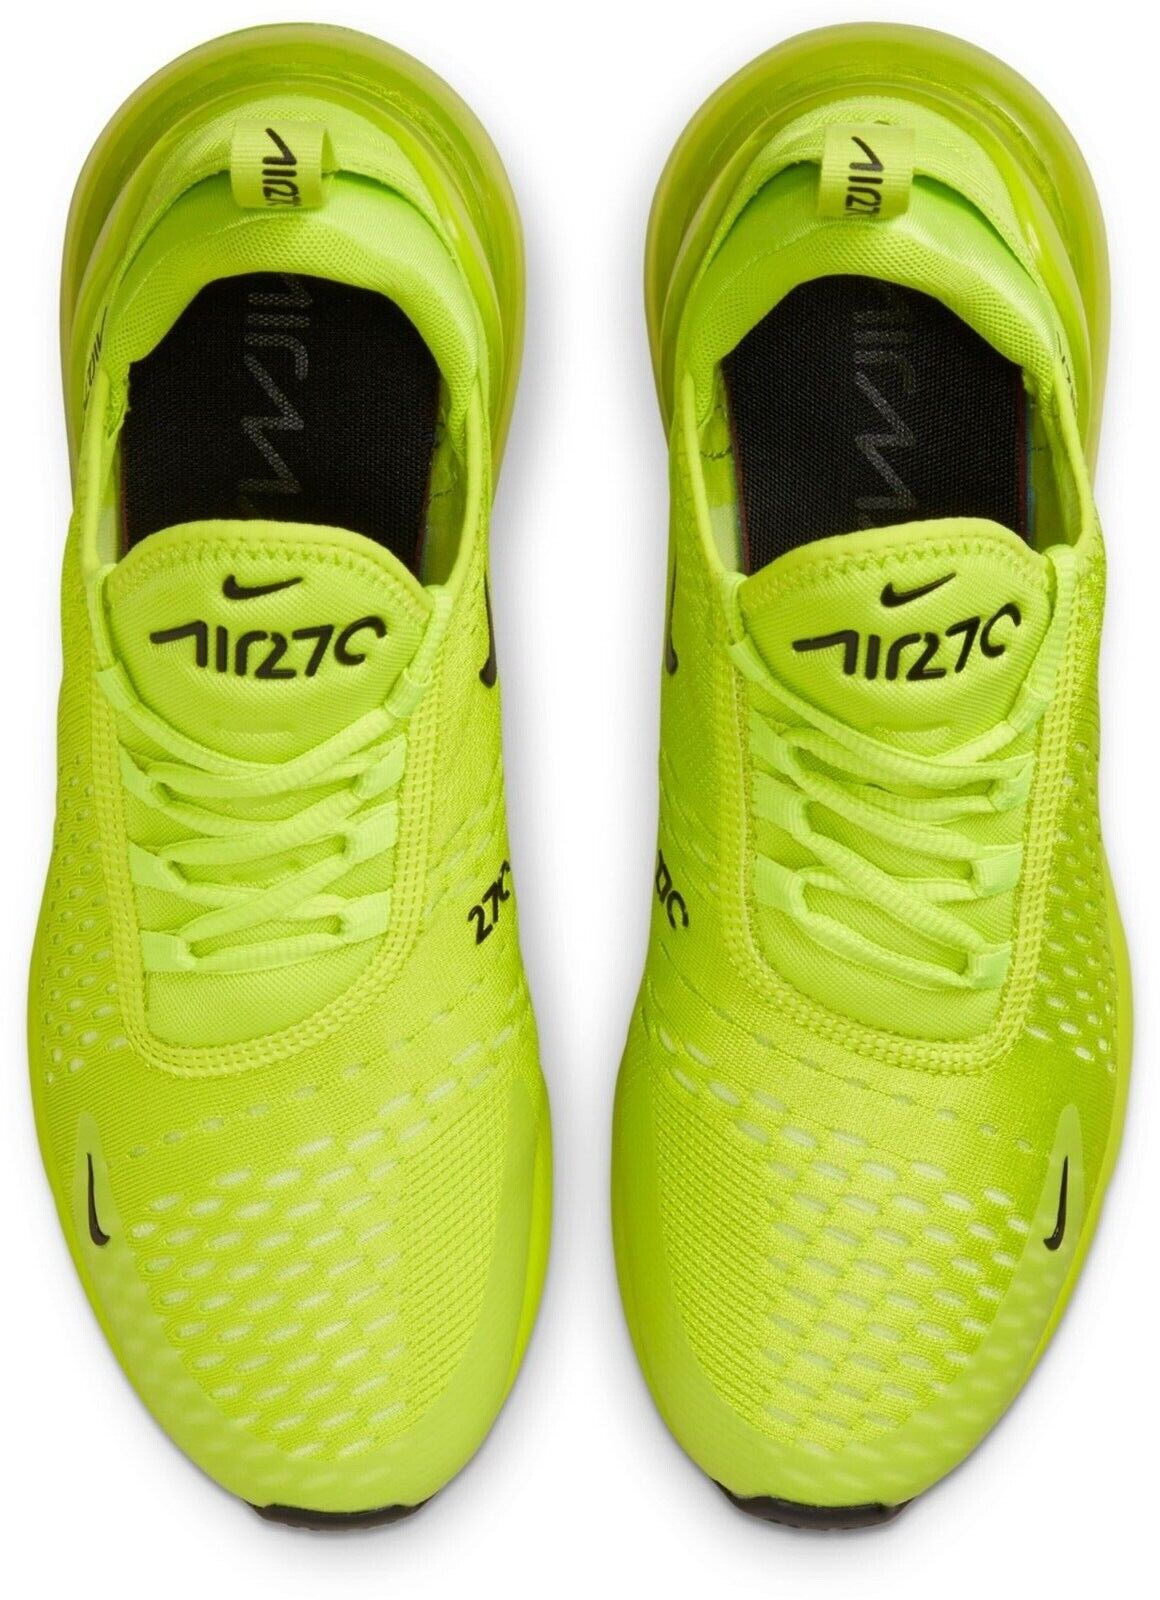 Nike Air Max 270 DV2226-300 Women's Atomic Green & Black Tennis Ball Shoes DDJJ9 (8.5) - image 3 of 5